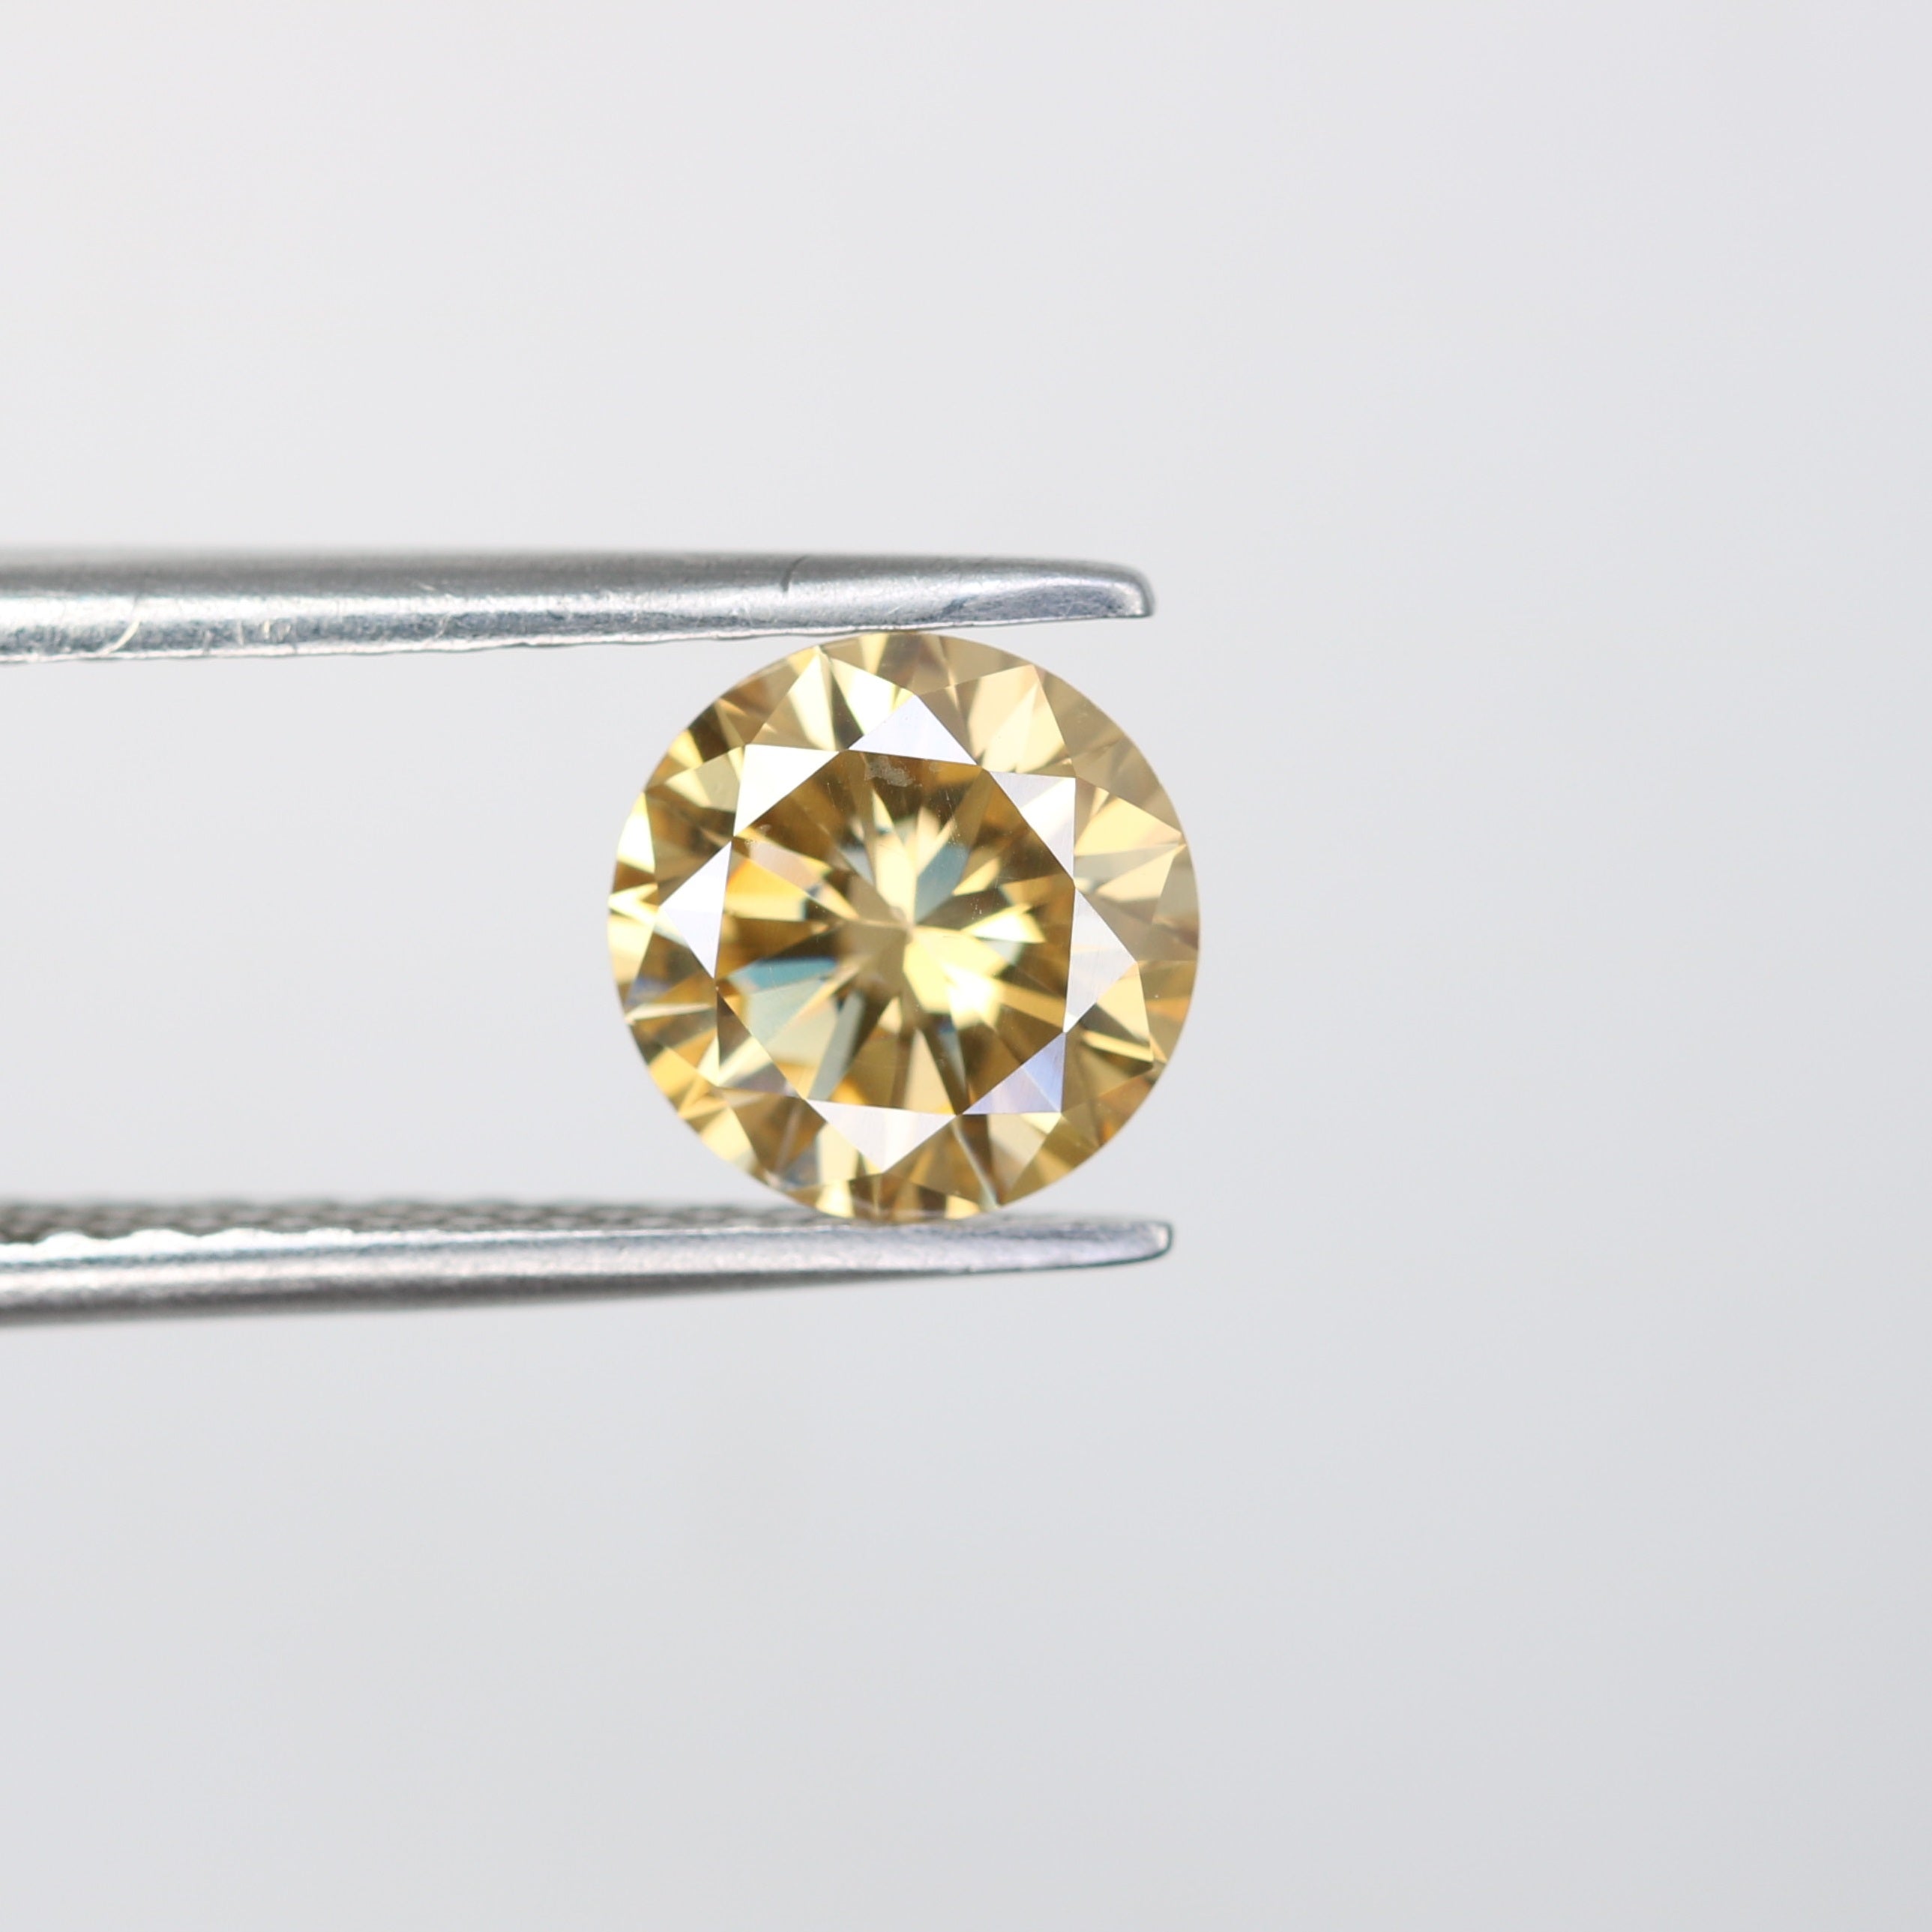 1.15 CT Orange Moissanite Round Brilliant Cut Diamond For Engagement Ring